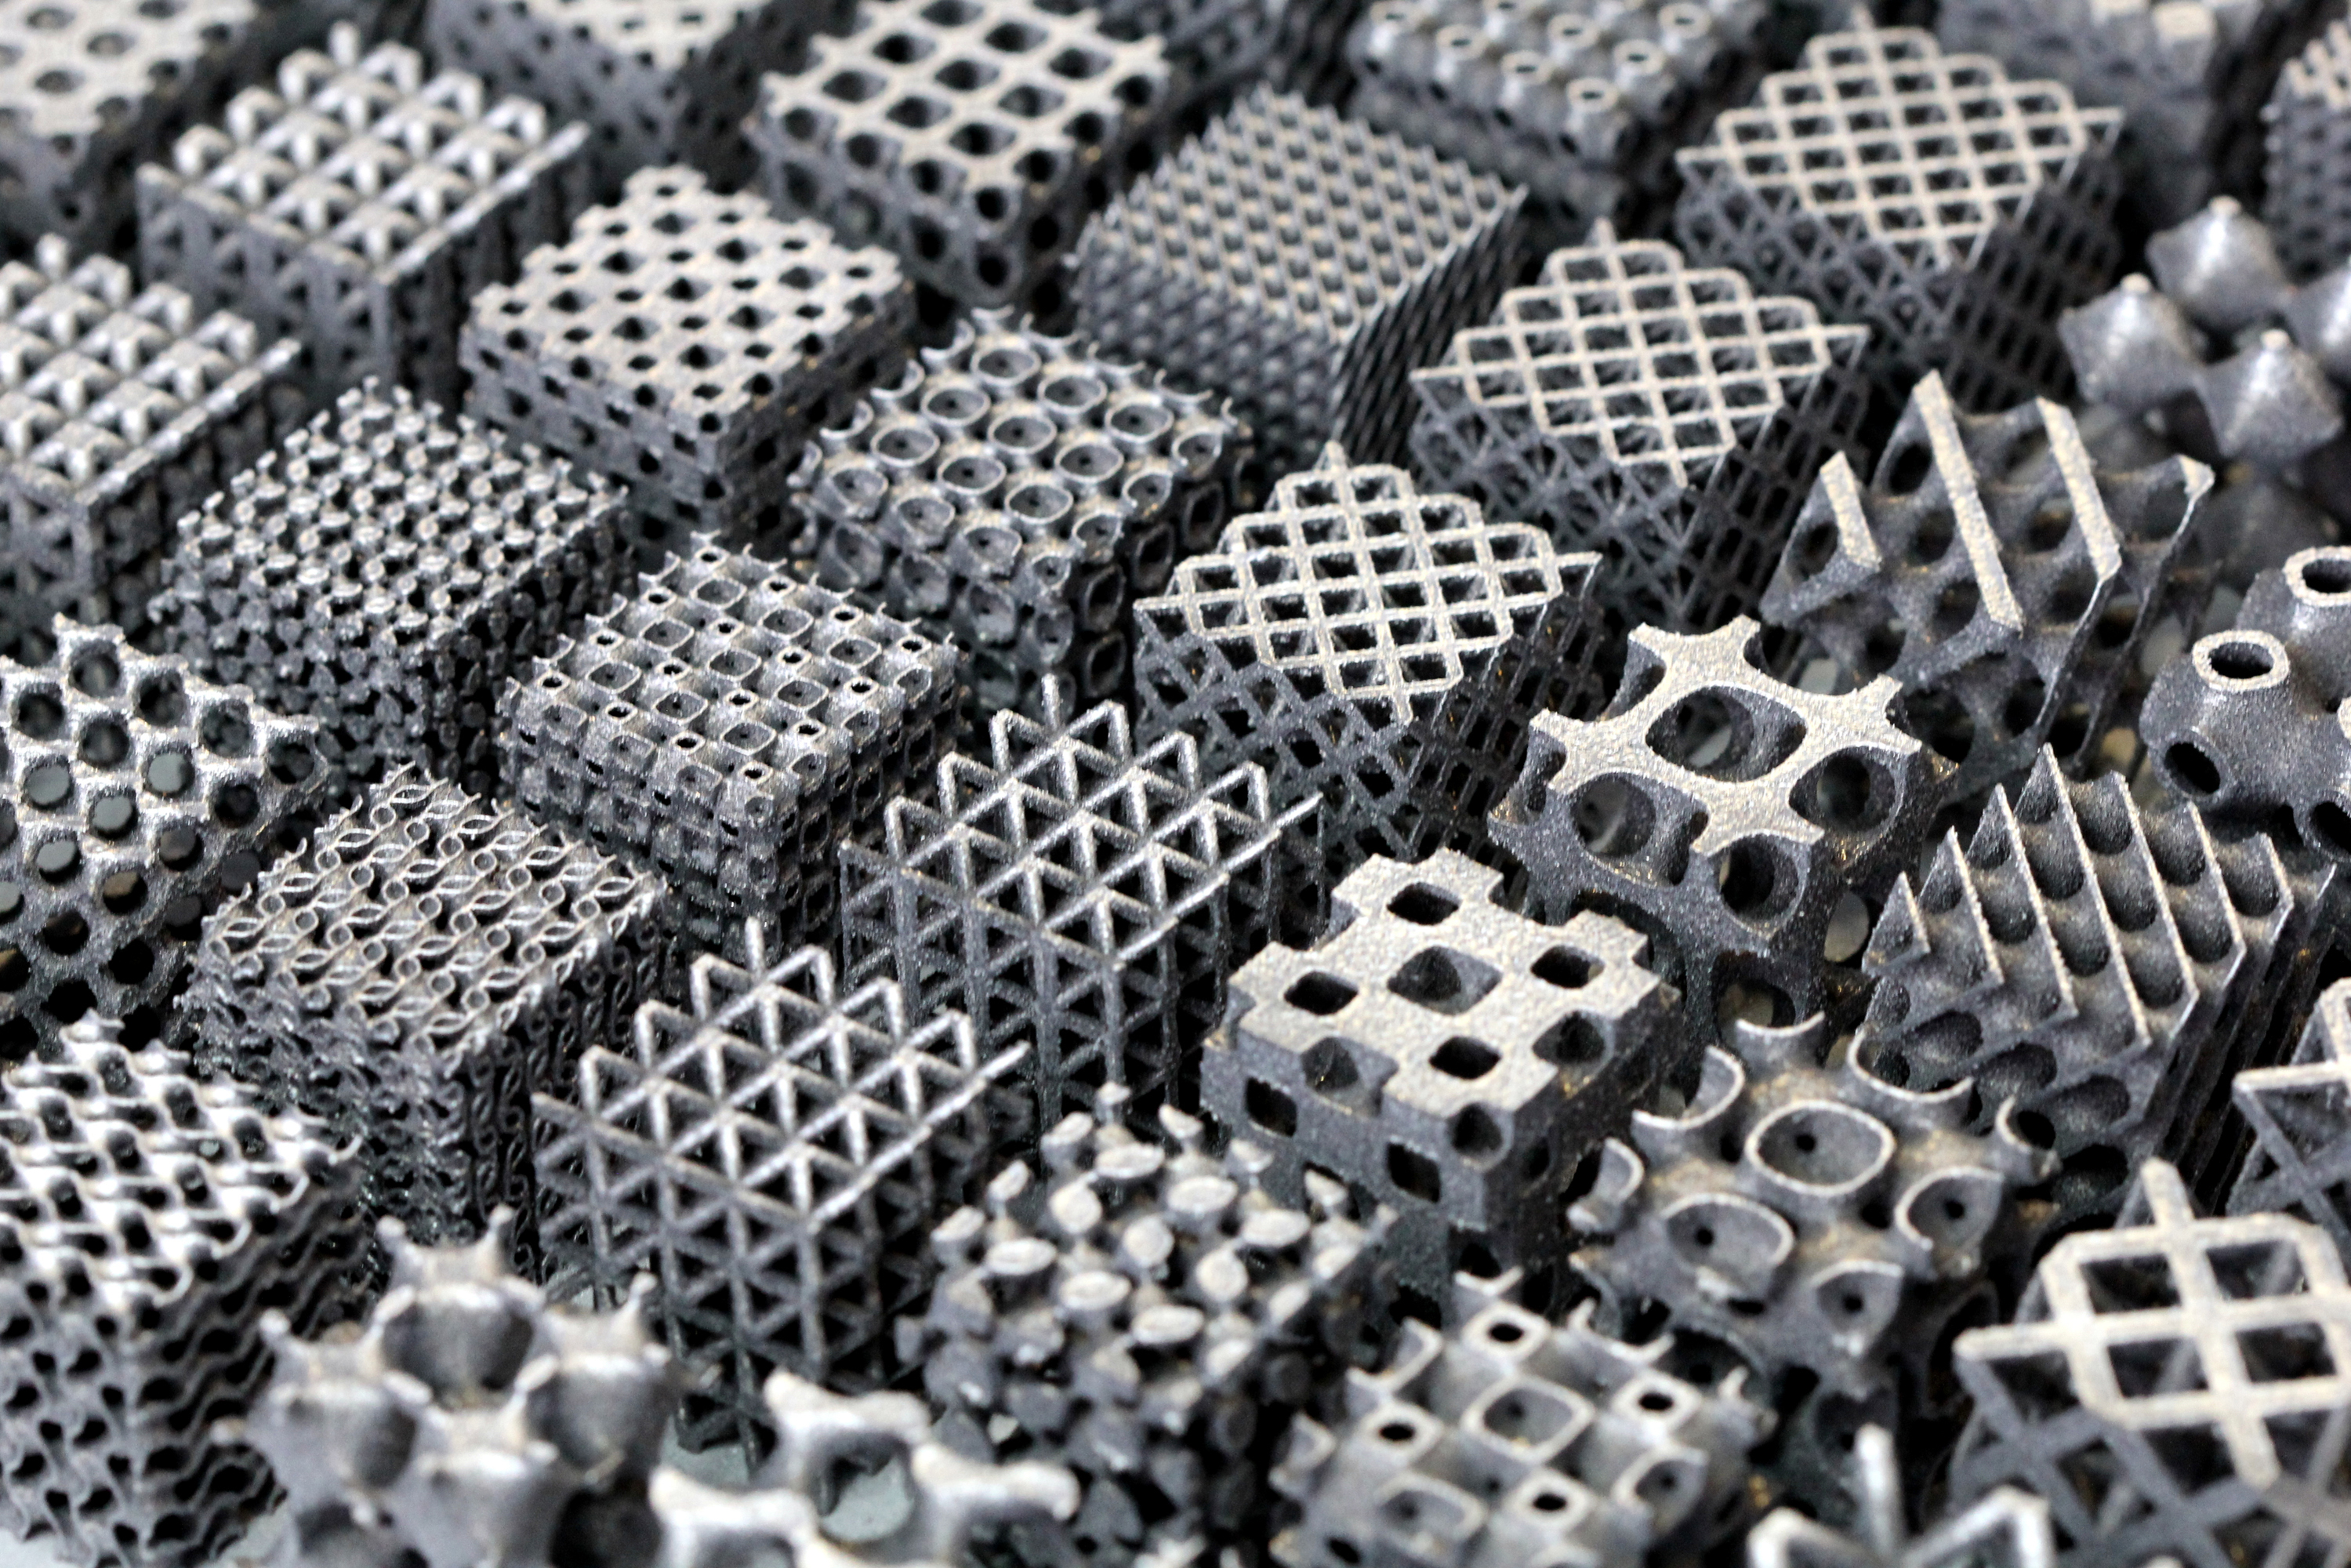 Aluminium building blocks.